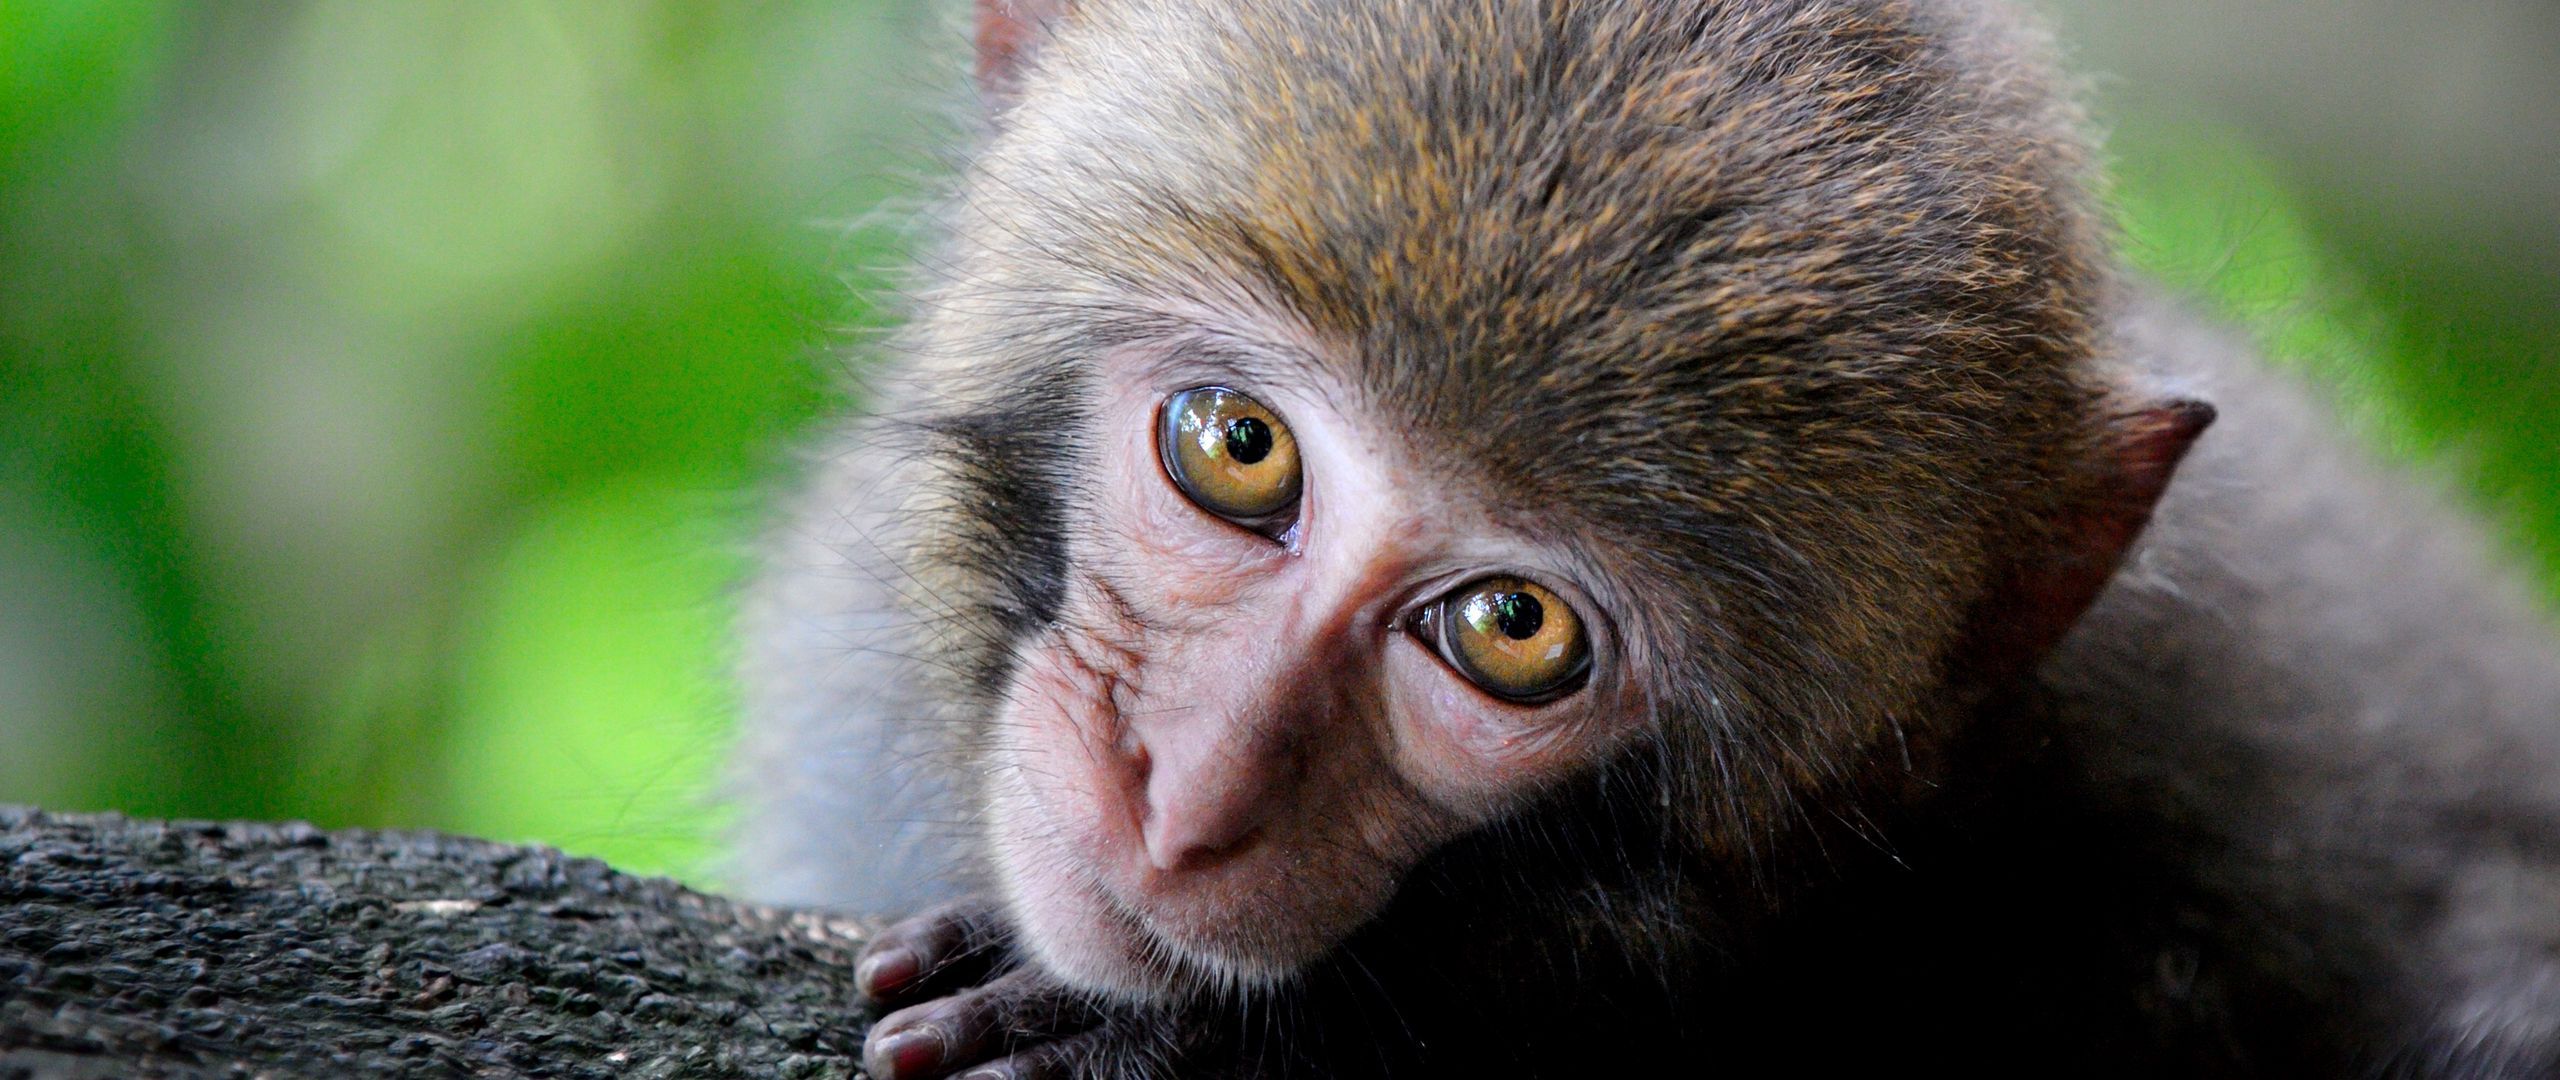 Download wallpaper 2560x1080 monkey, cute, look, primate dual wide 1080p HD background